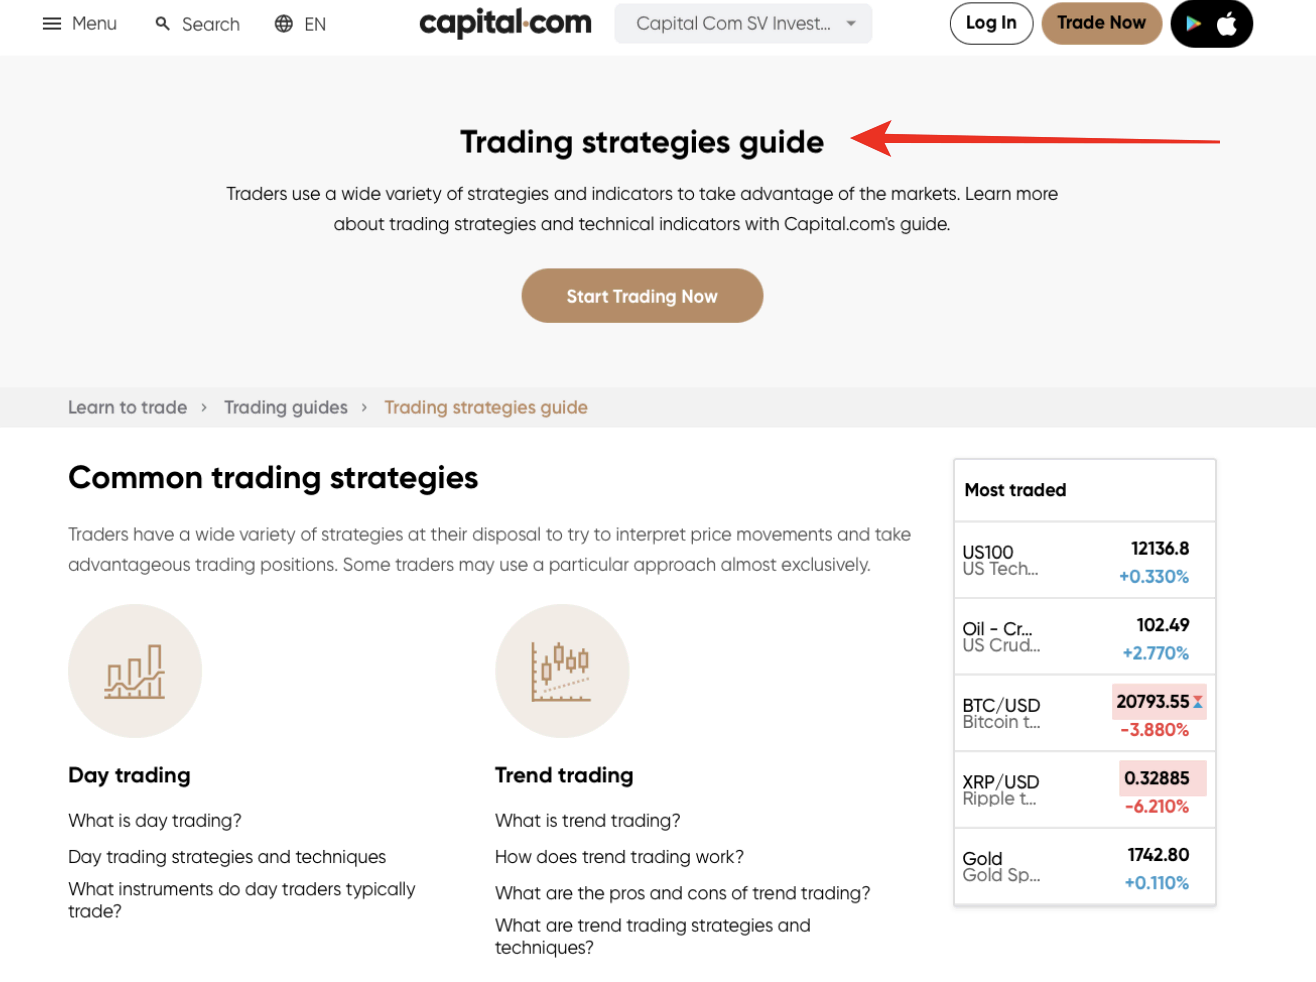 Strategi Capital.com